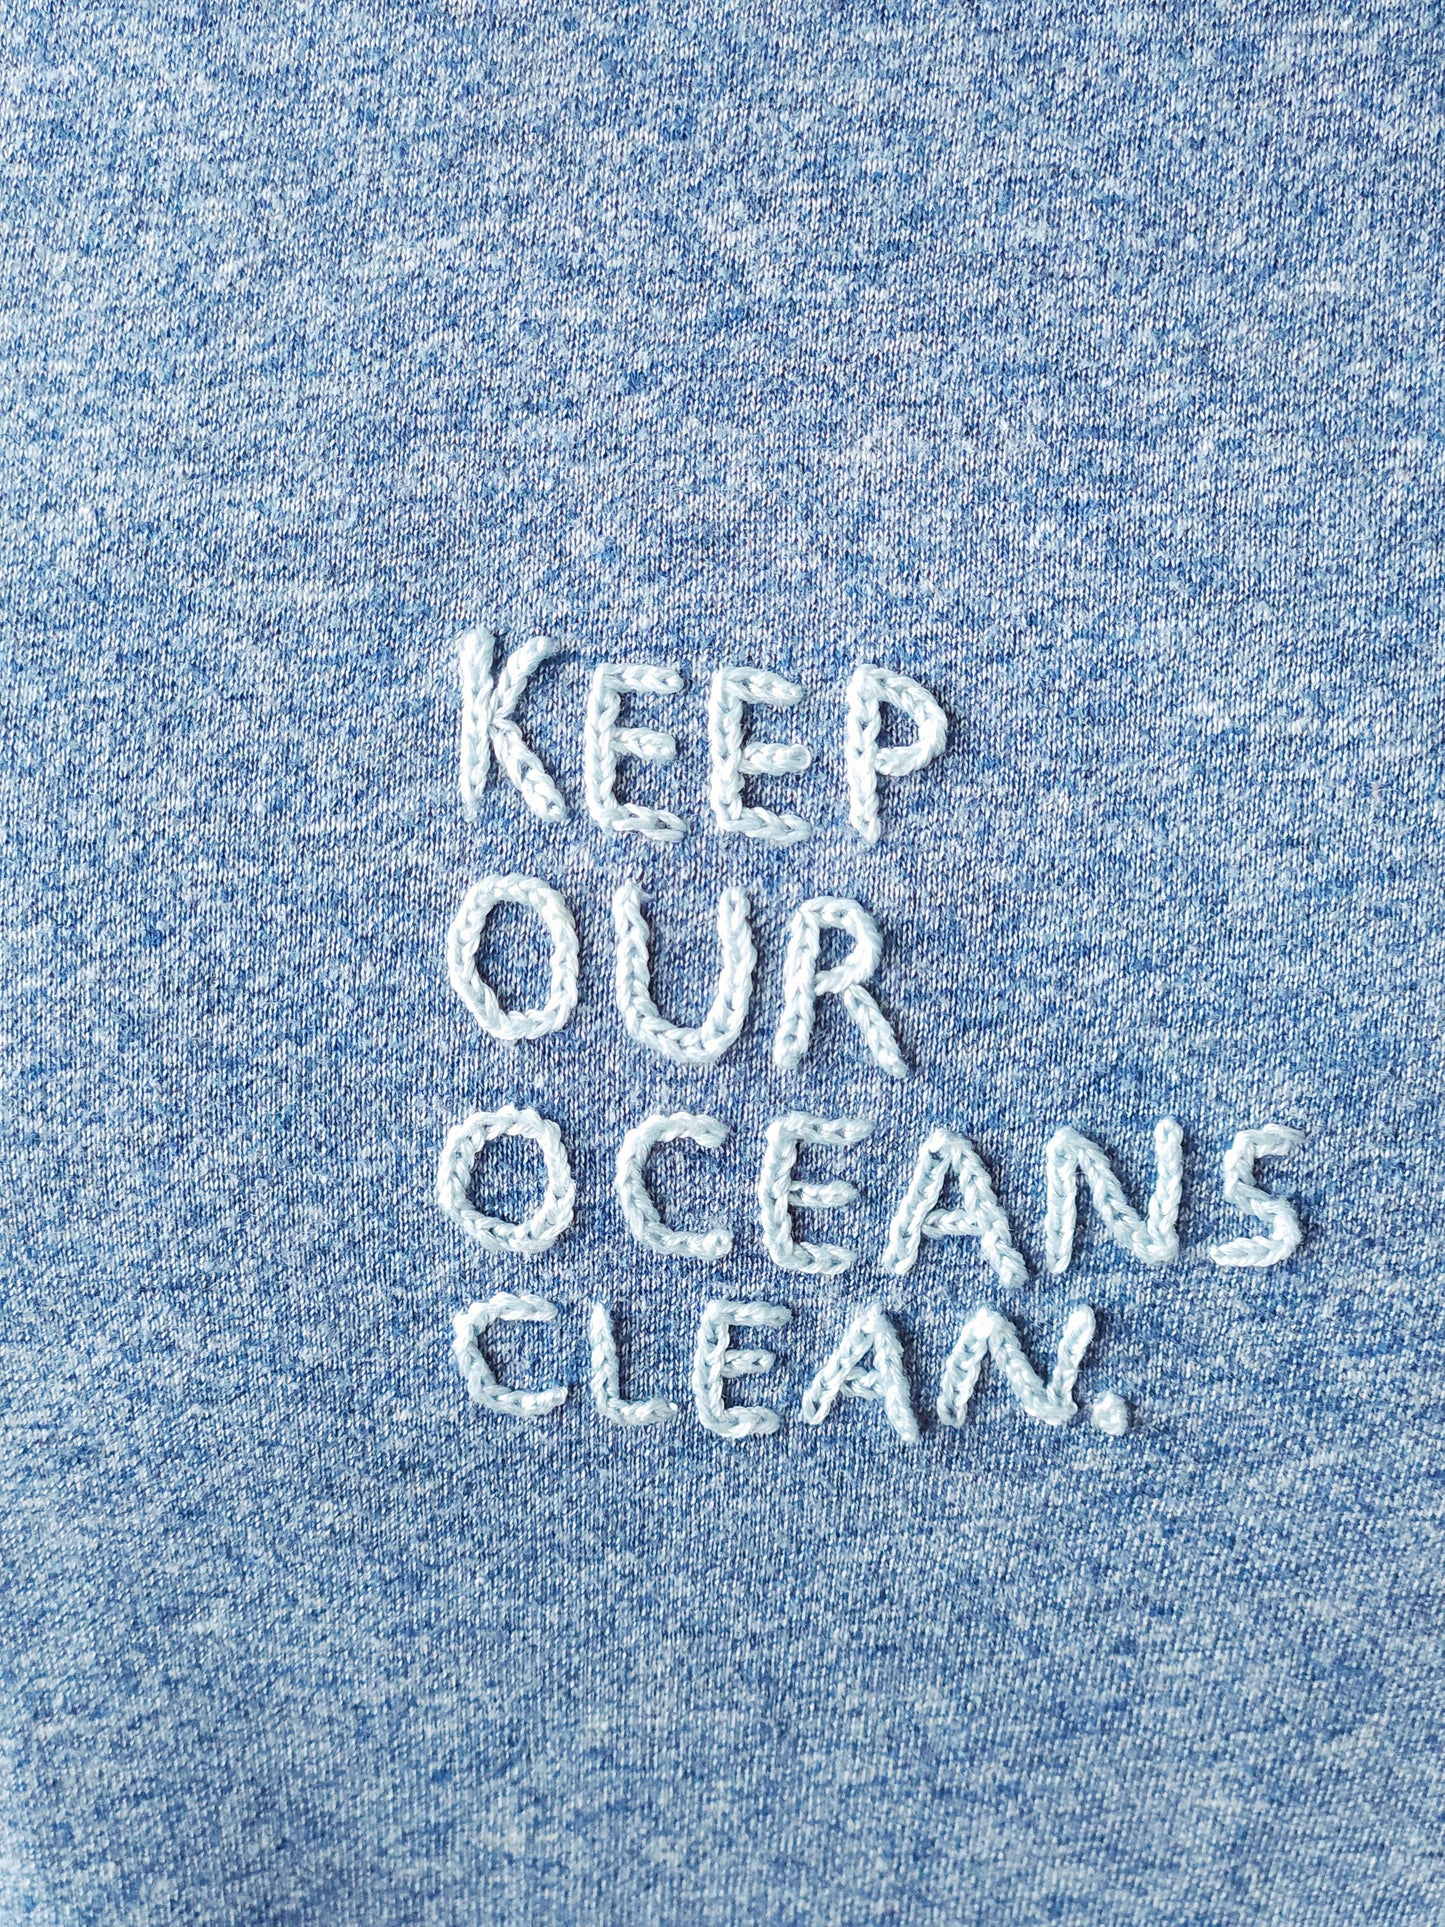 Keep our oceans clean